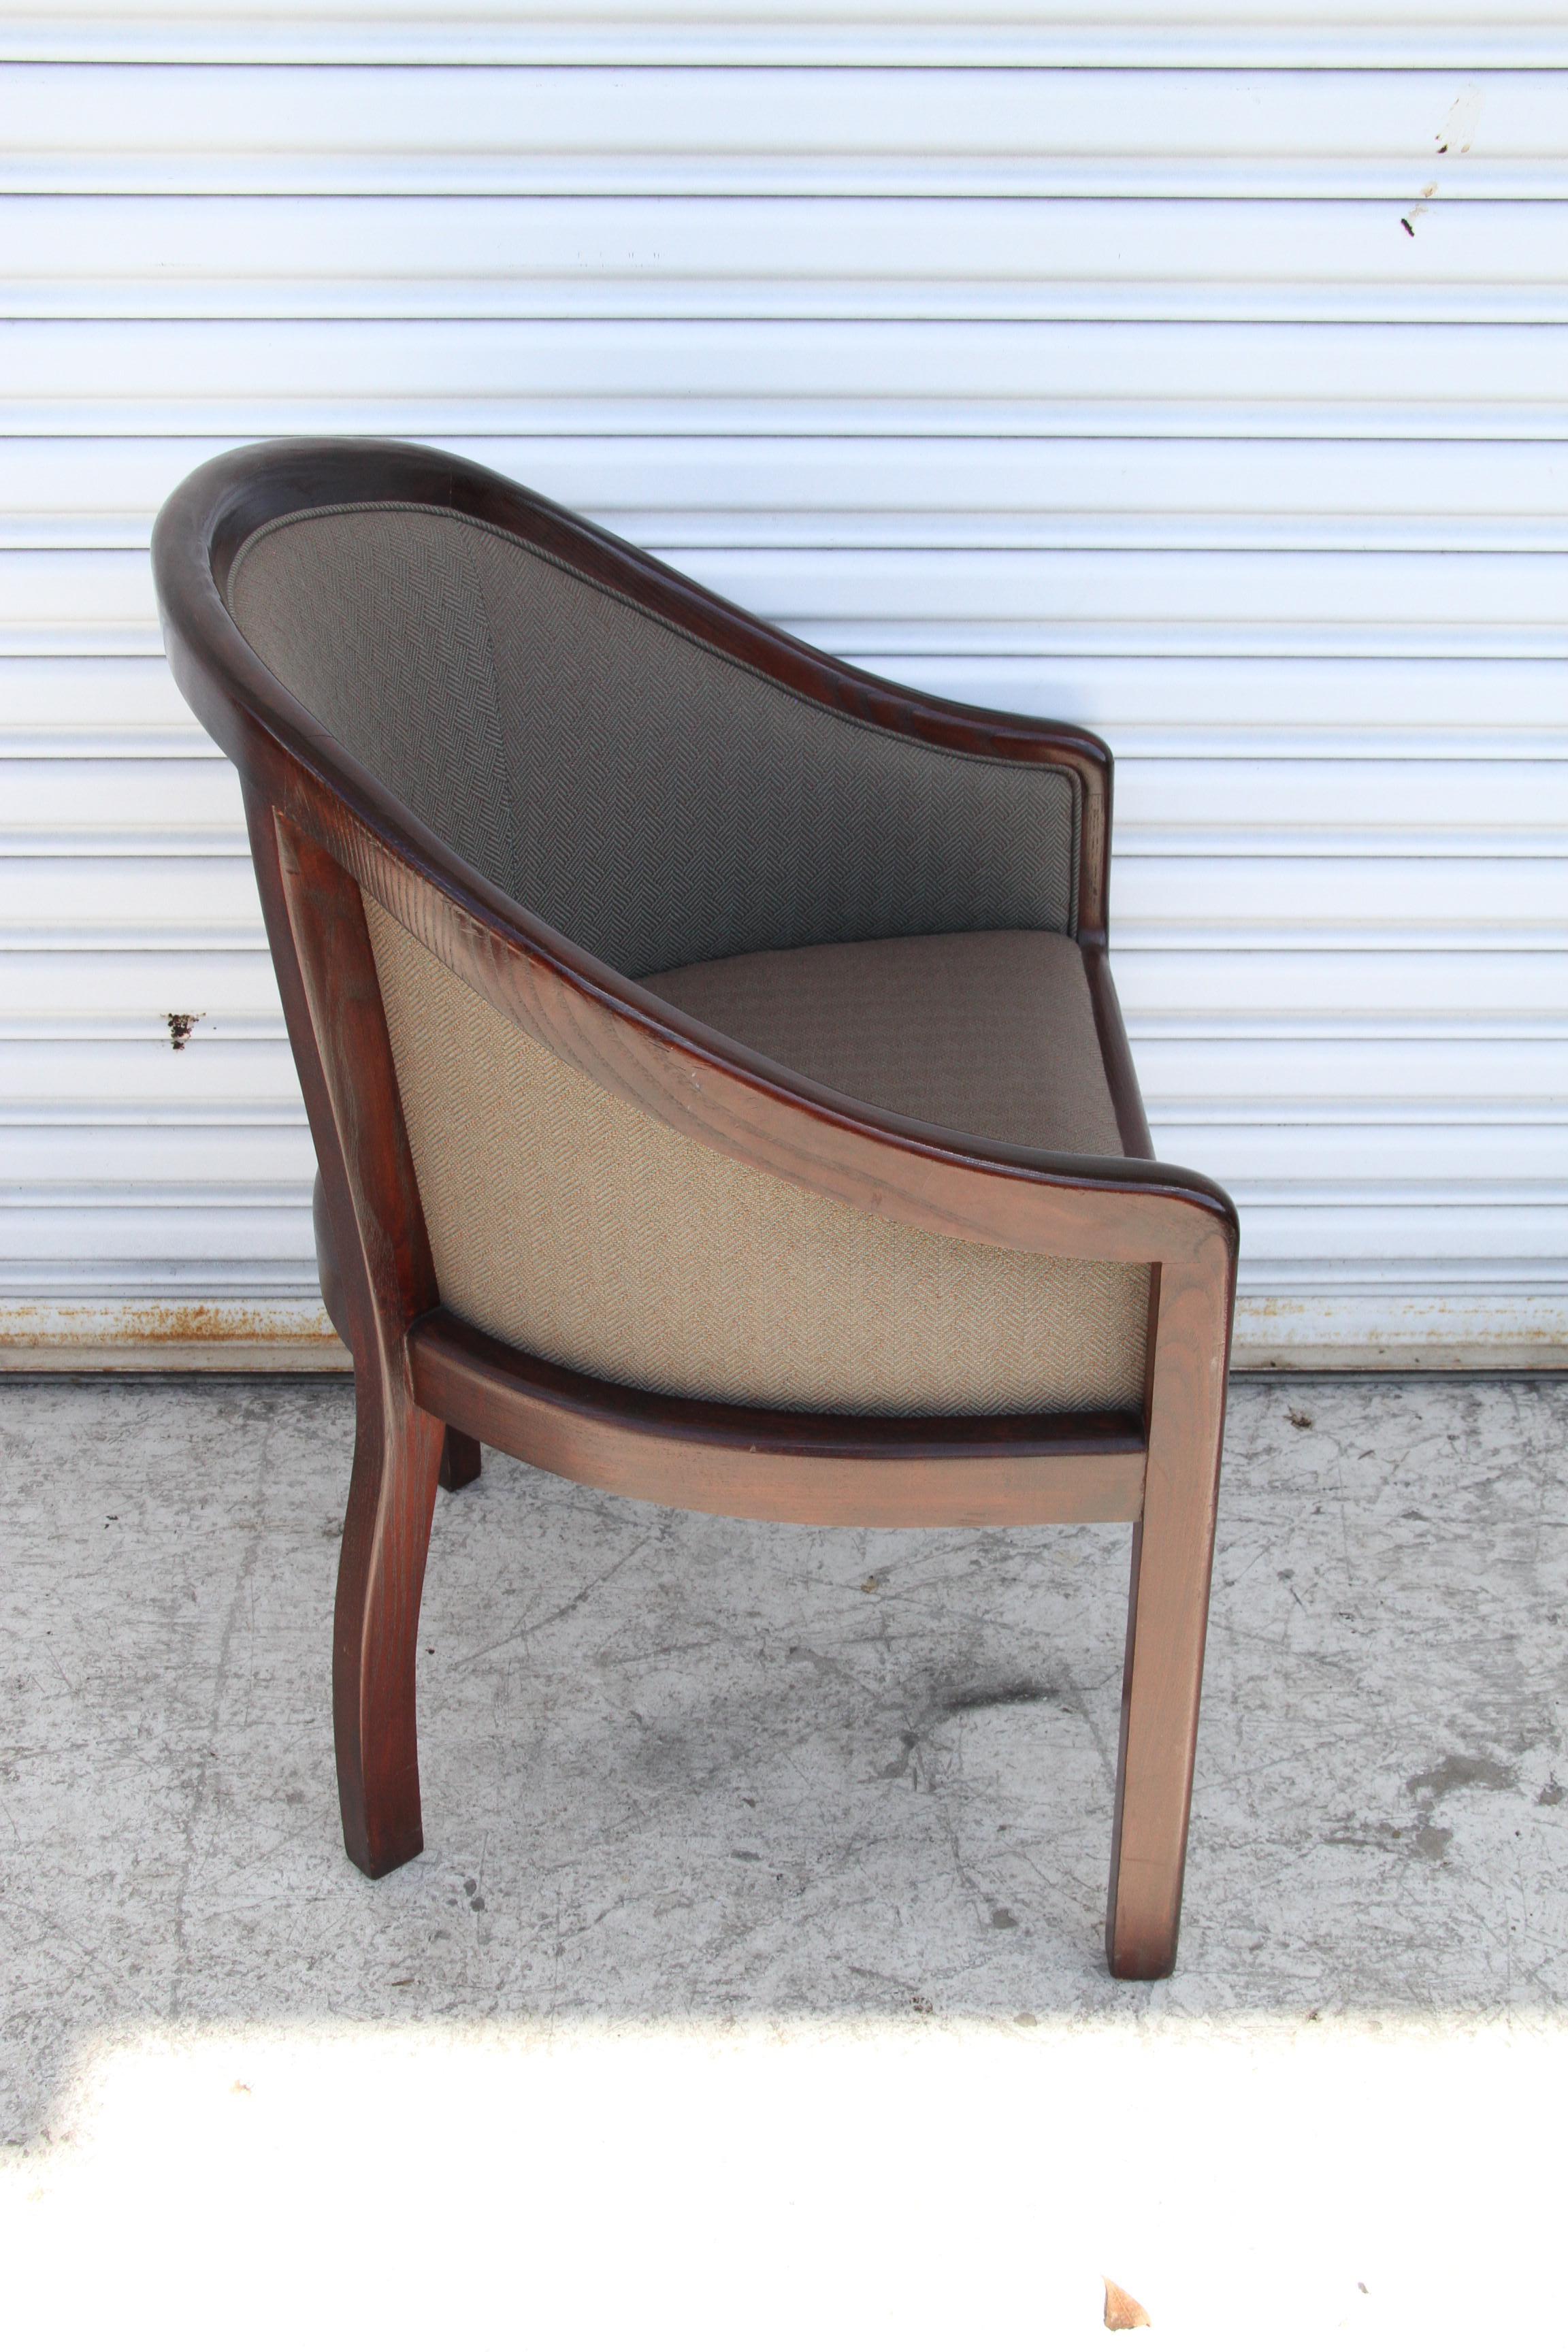 20th Century 1 Midcentury Jack Lenor Larsen Barrel Chair